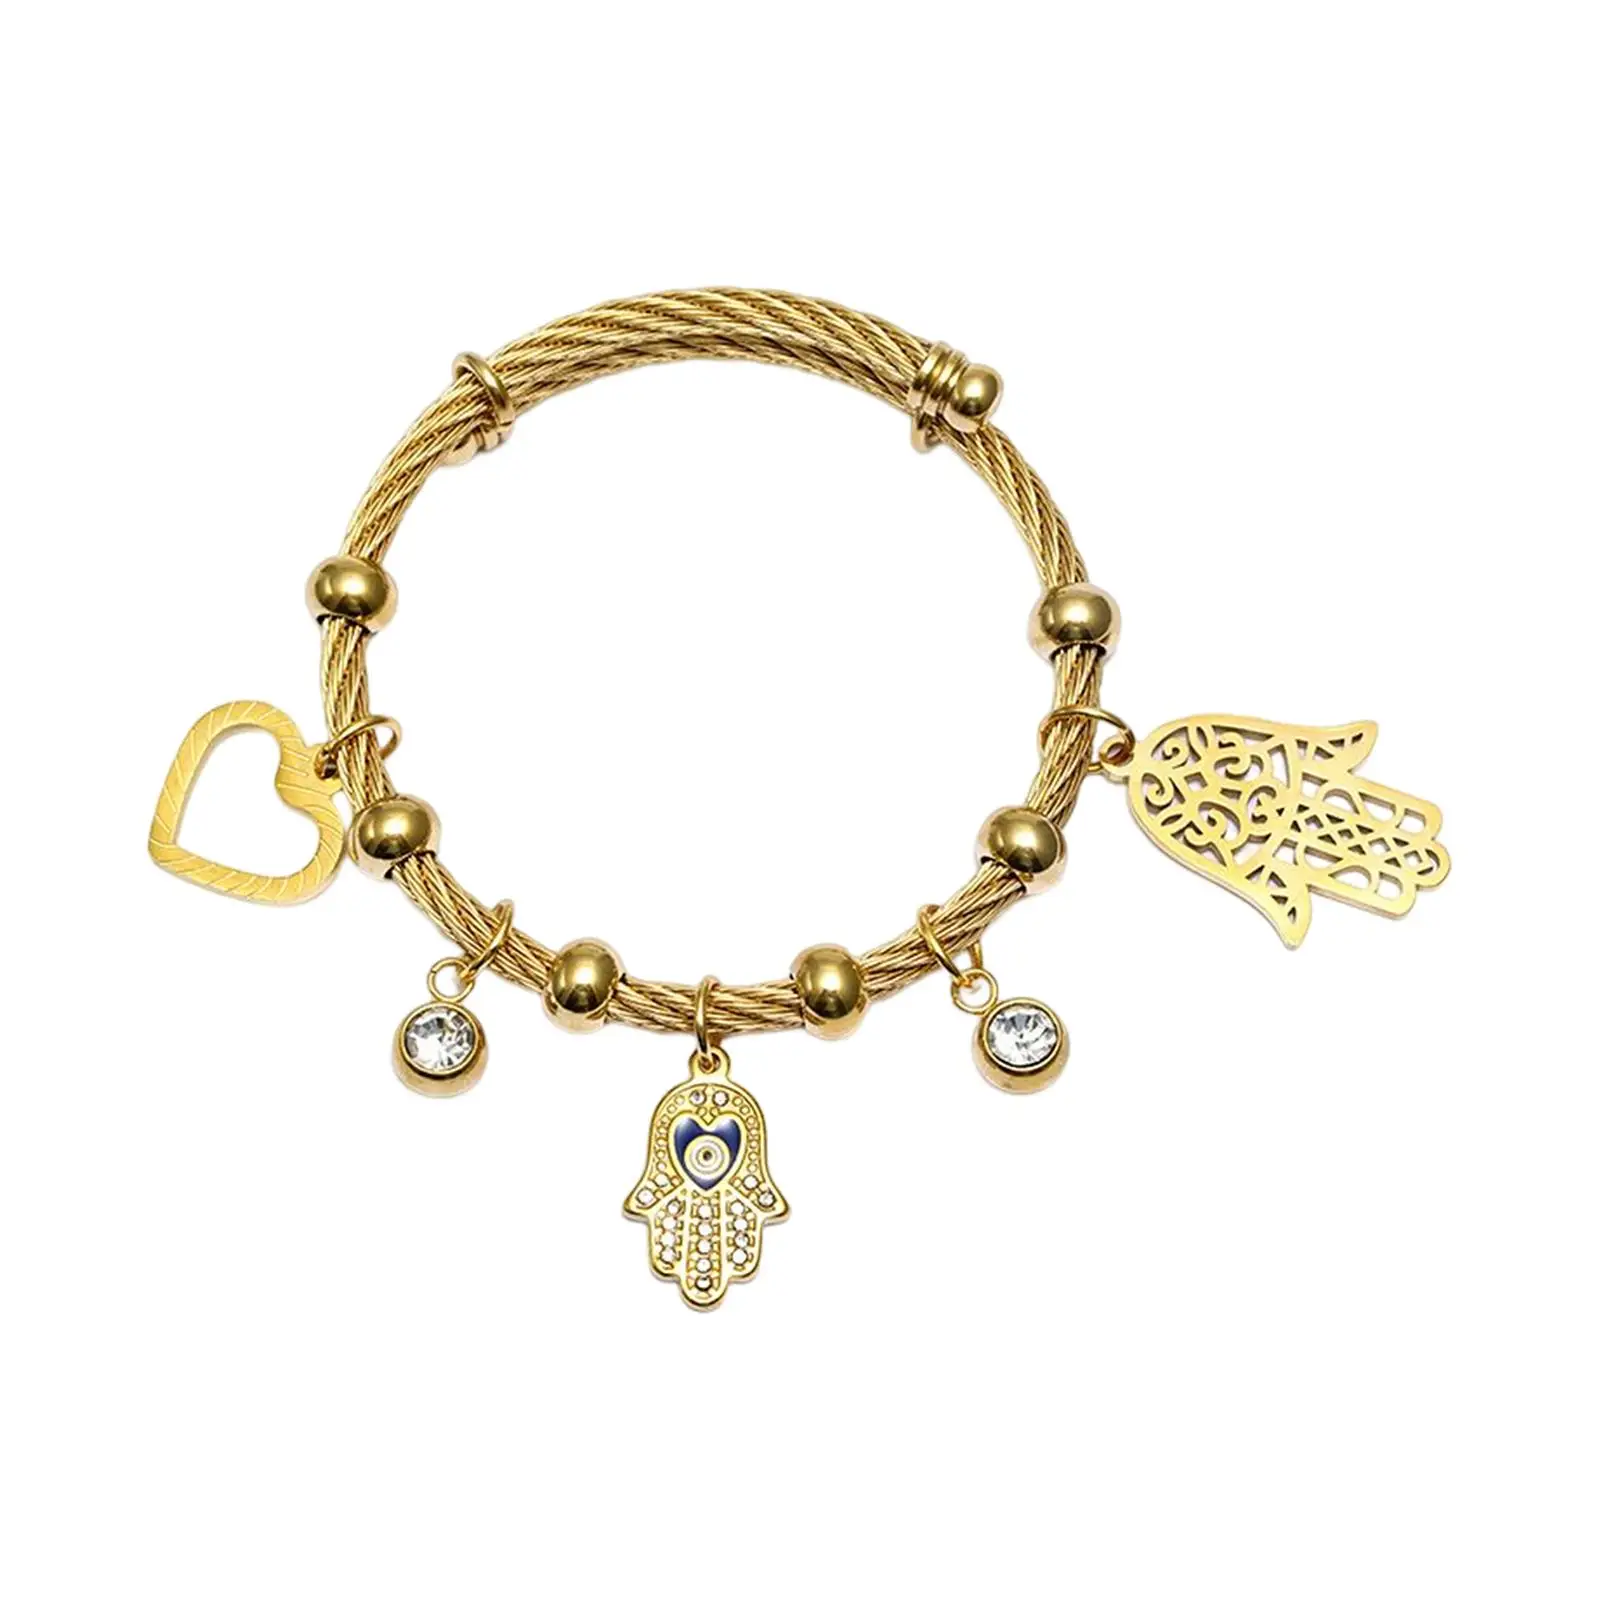 Modern Fatima Hamsa Hand Bracelet High Polished Adjustable Chain with Zircon Heart Pendant Charm Bracelet for Women Wife Mom